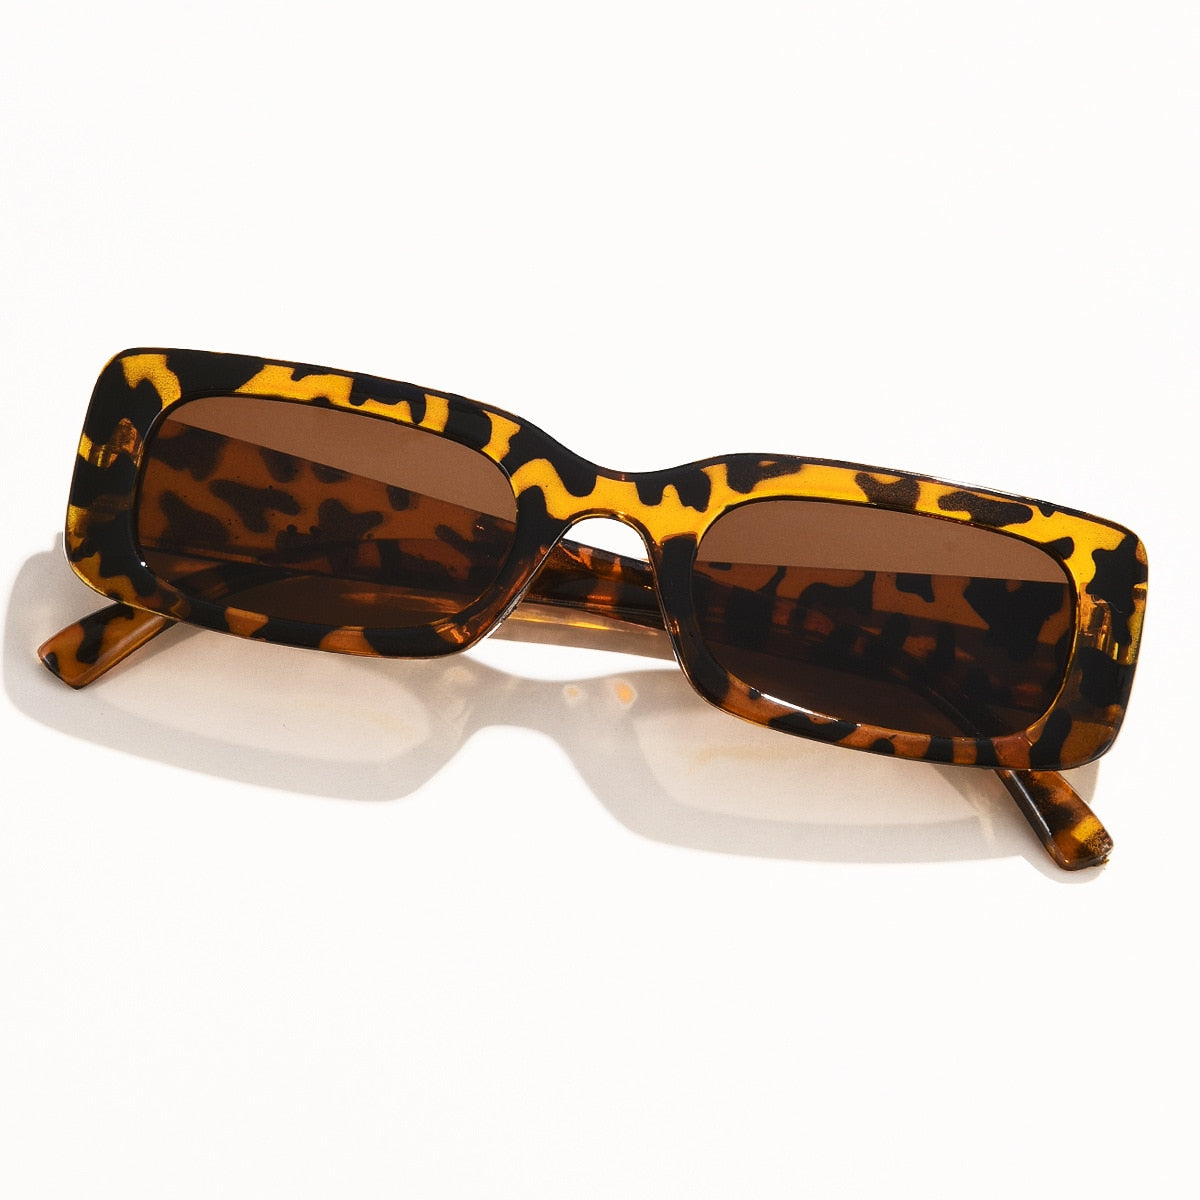 Buy New Vintage Small Rectangle Sunglasses Women Men - Jack Marc